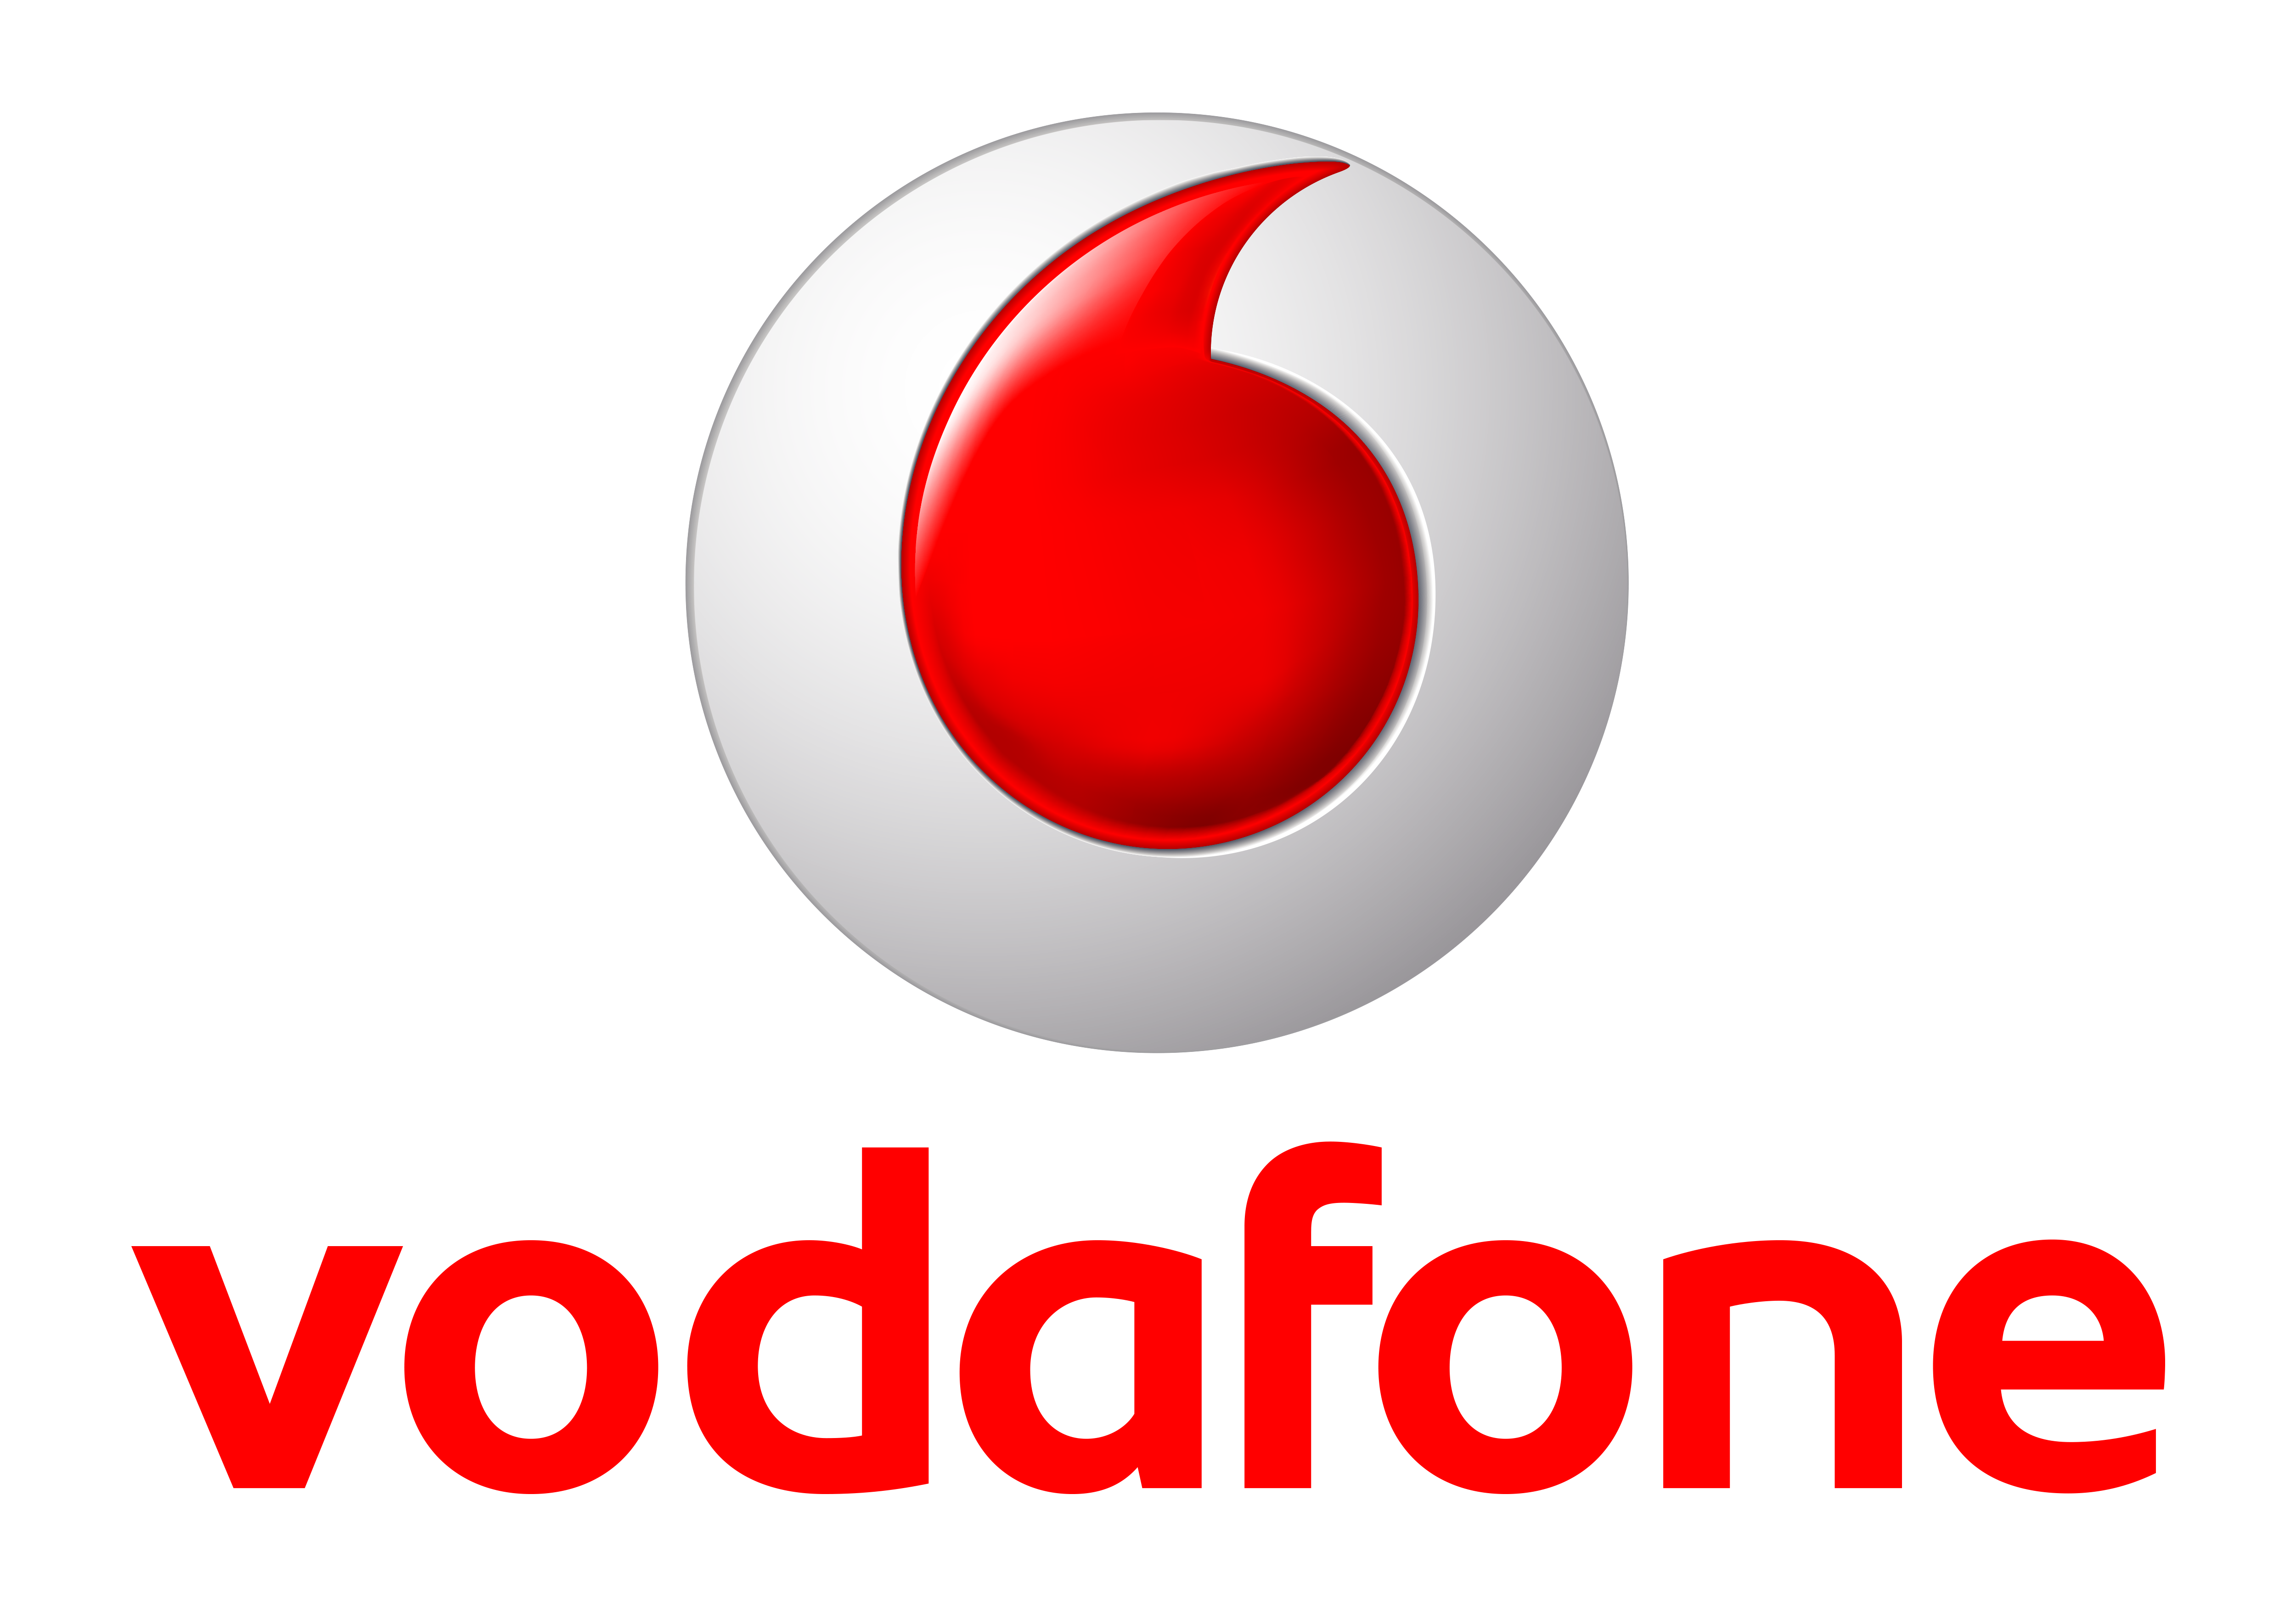 Vodafone-logo.png